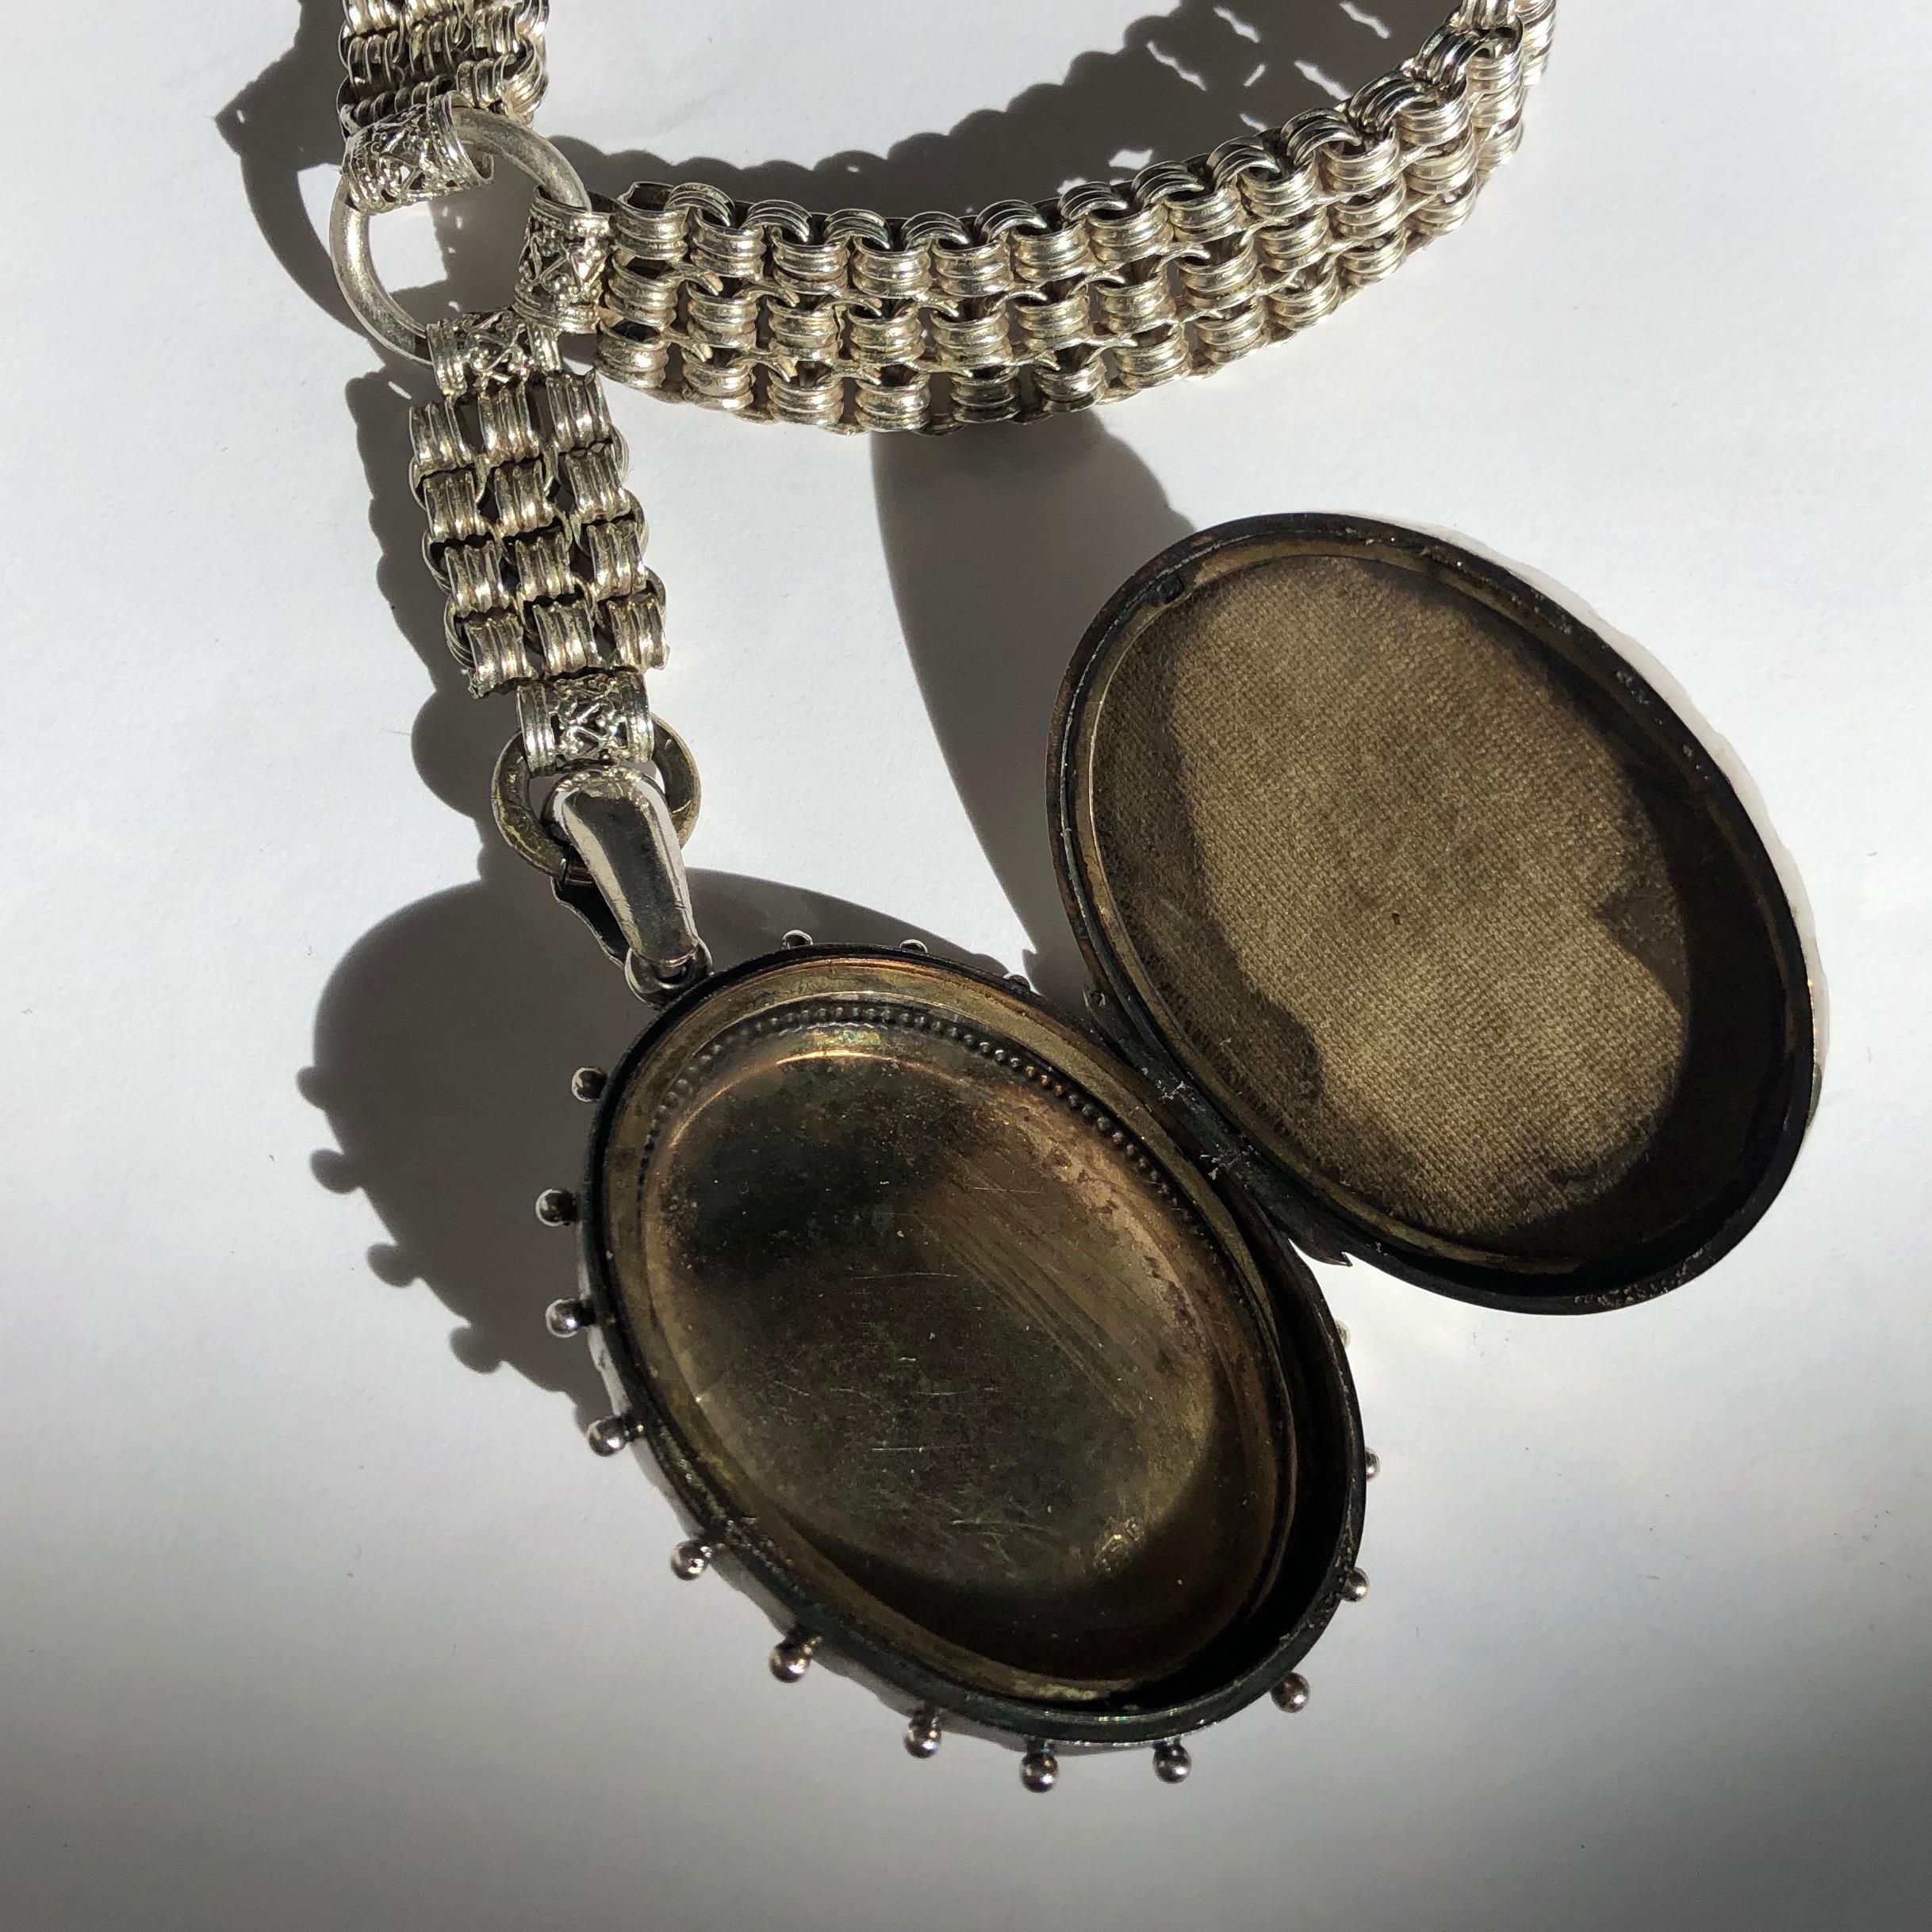 silver heart locket necklace